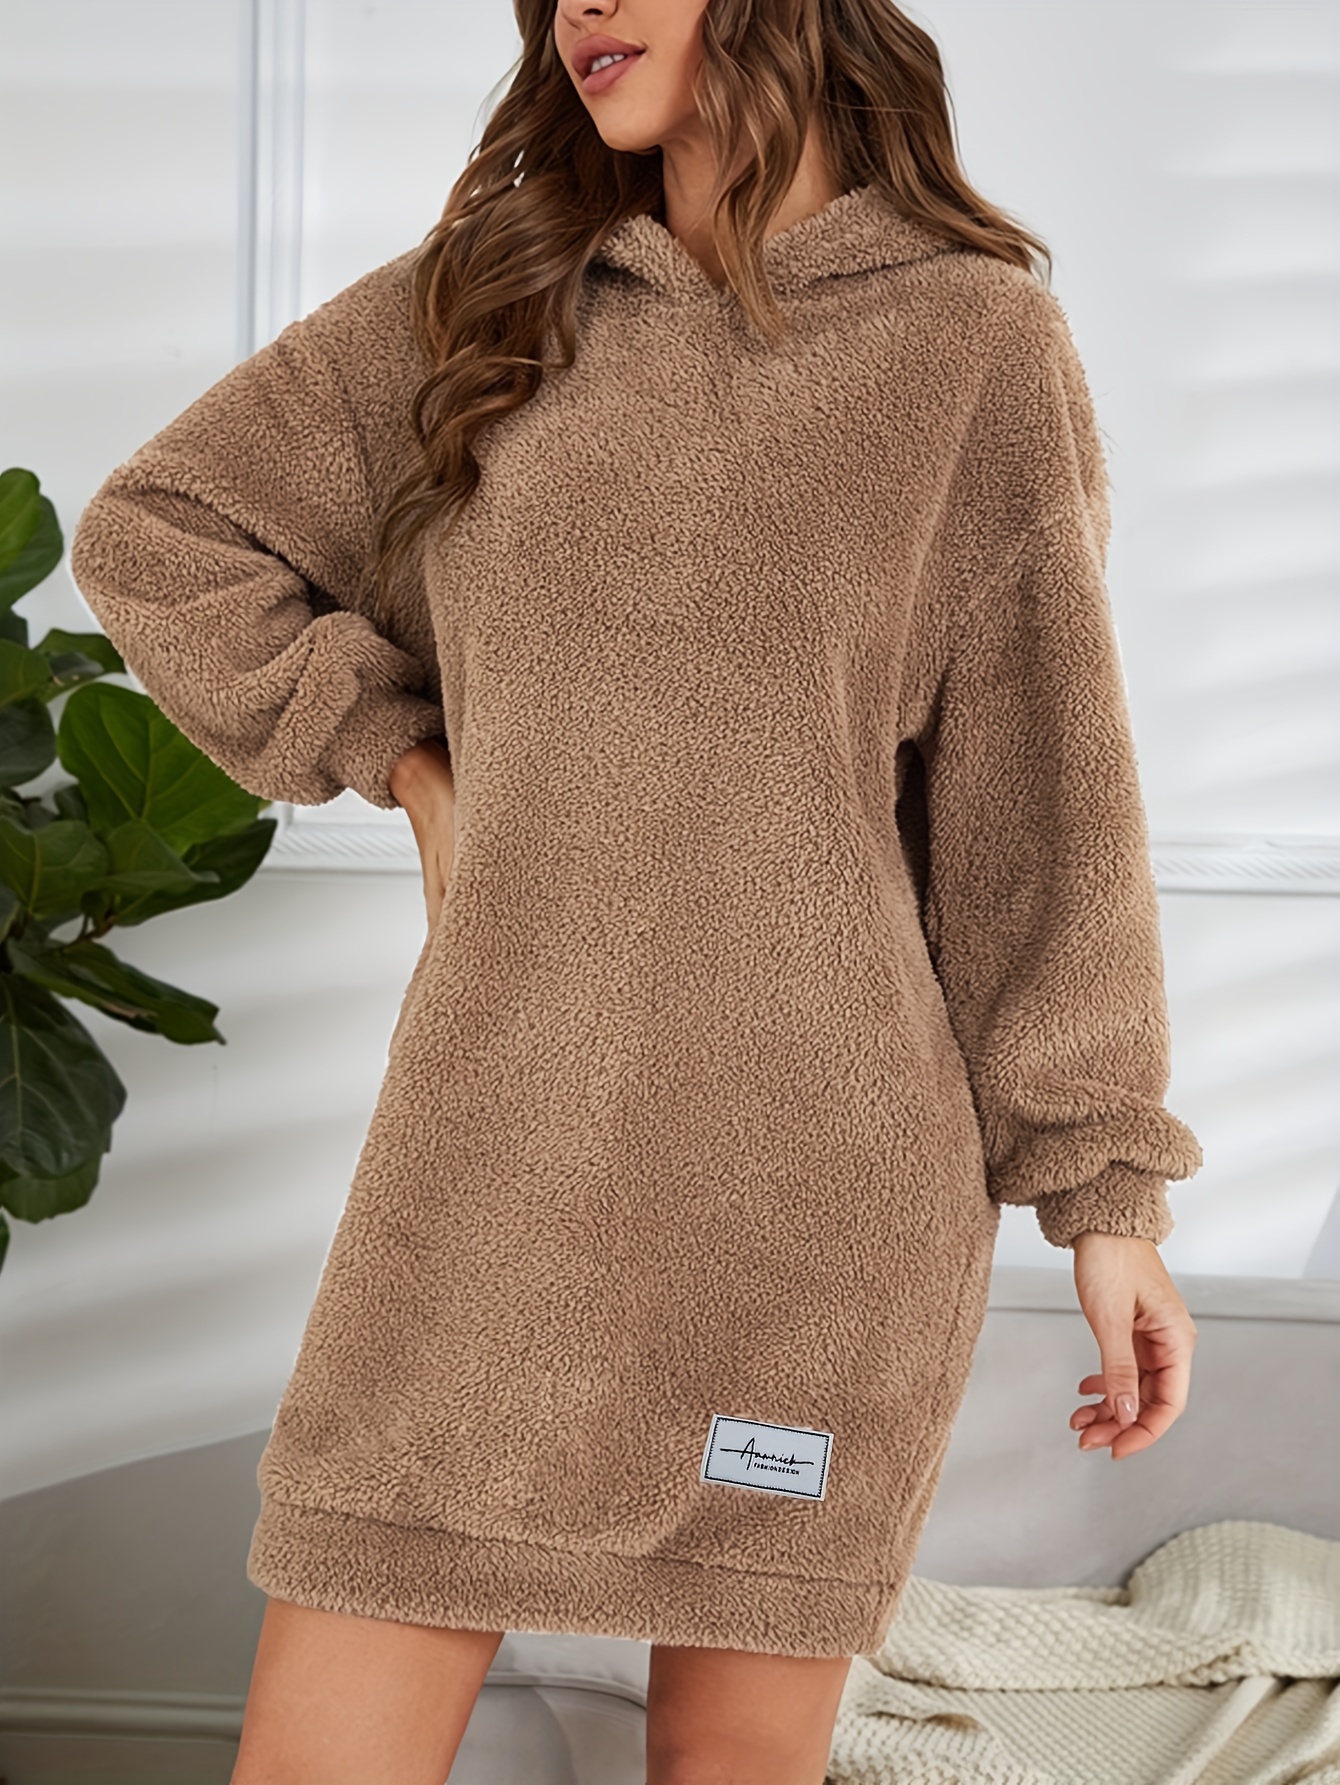 hooded teddy dress, hooded teddy dress casual long sleeve simple warm dress womens clothing details 37